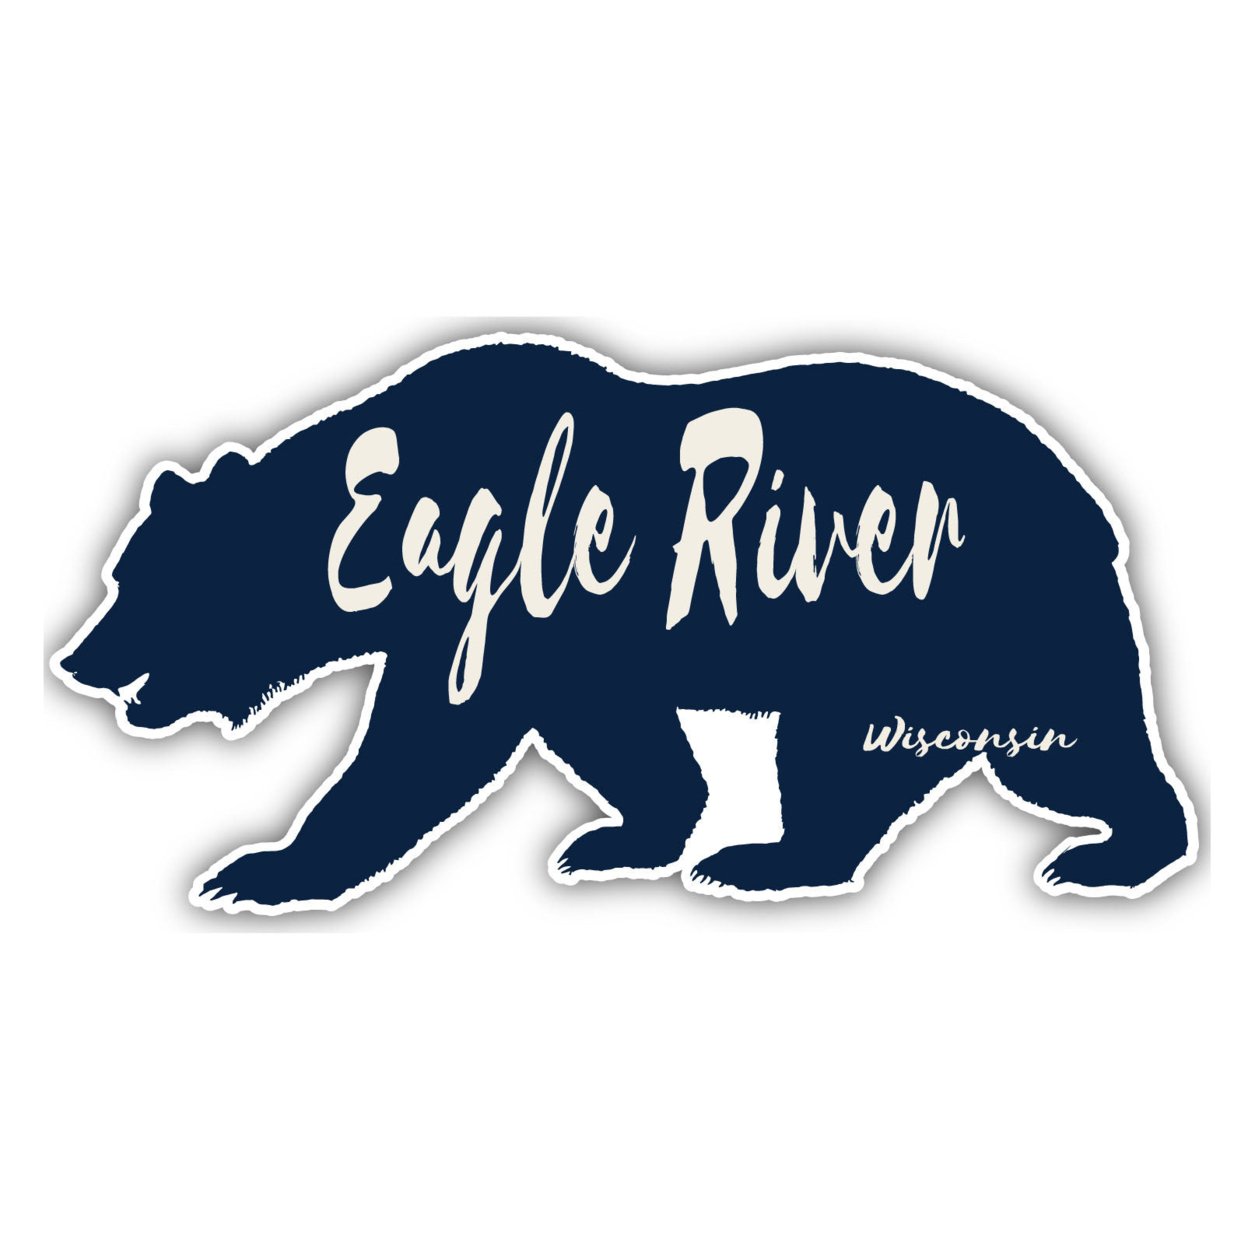 Eagle River Wisconsin Souvenir Decorative Stickers (Choose Theme And Size) - Single Unit, 8-Inch, Bear